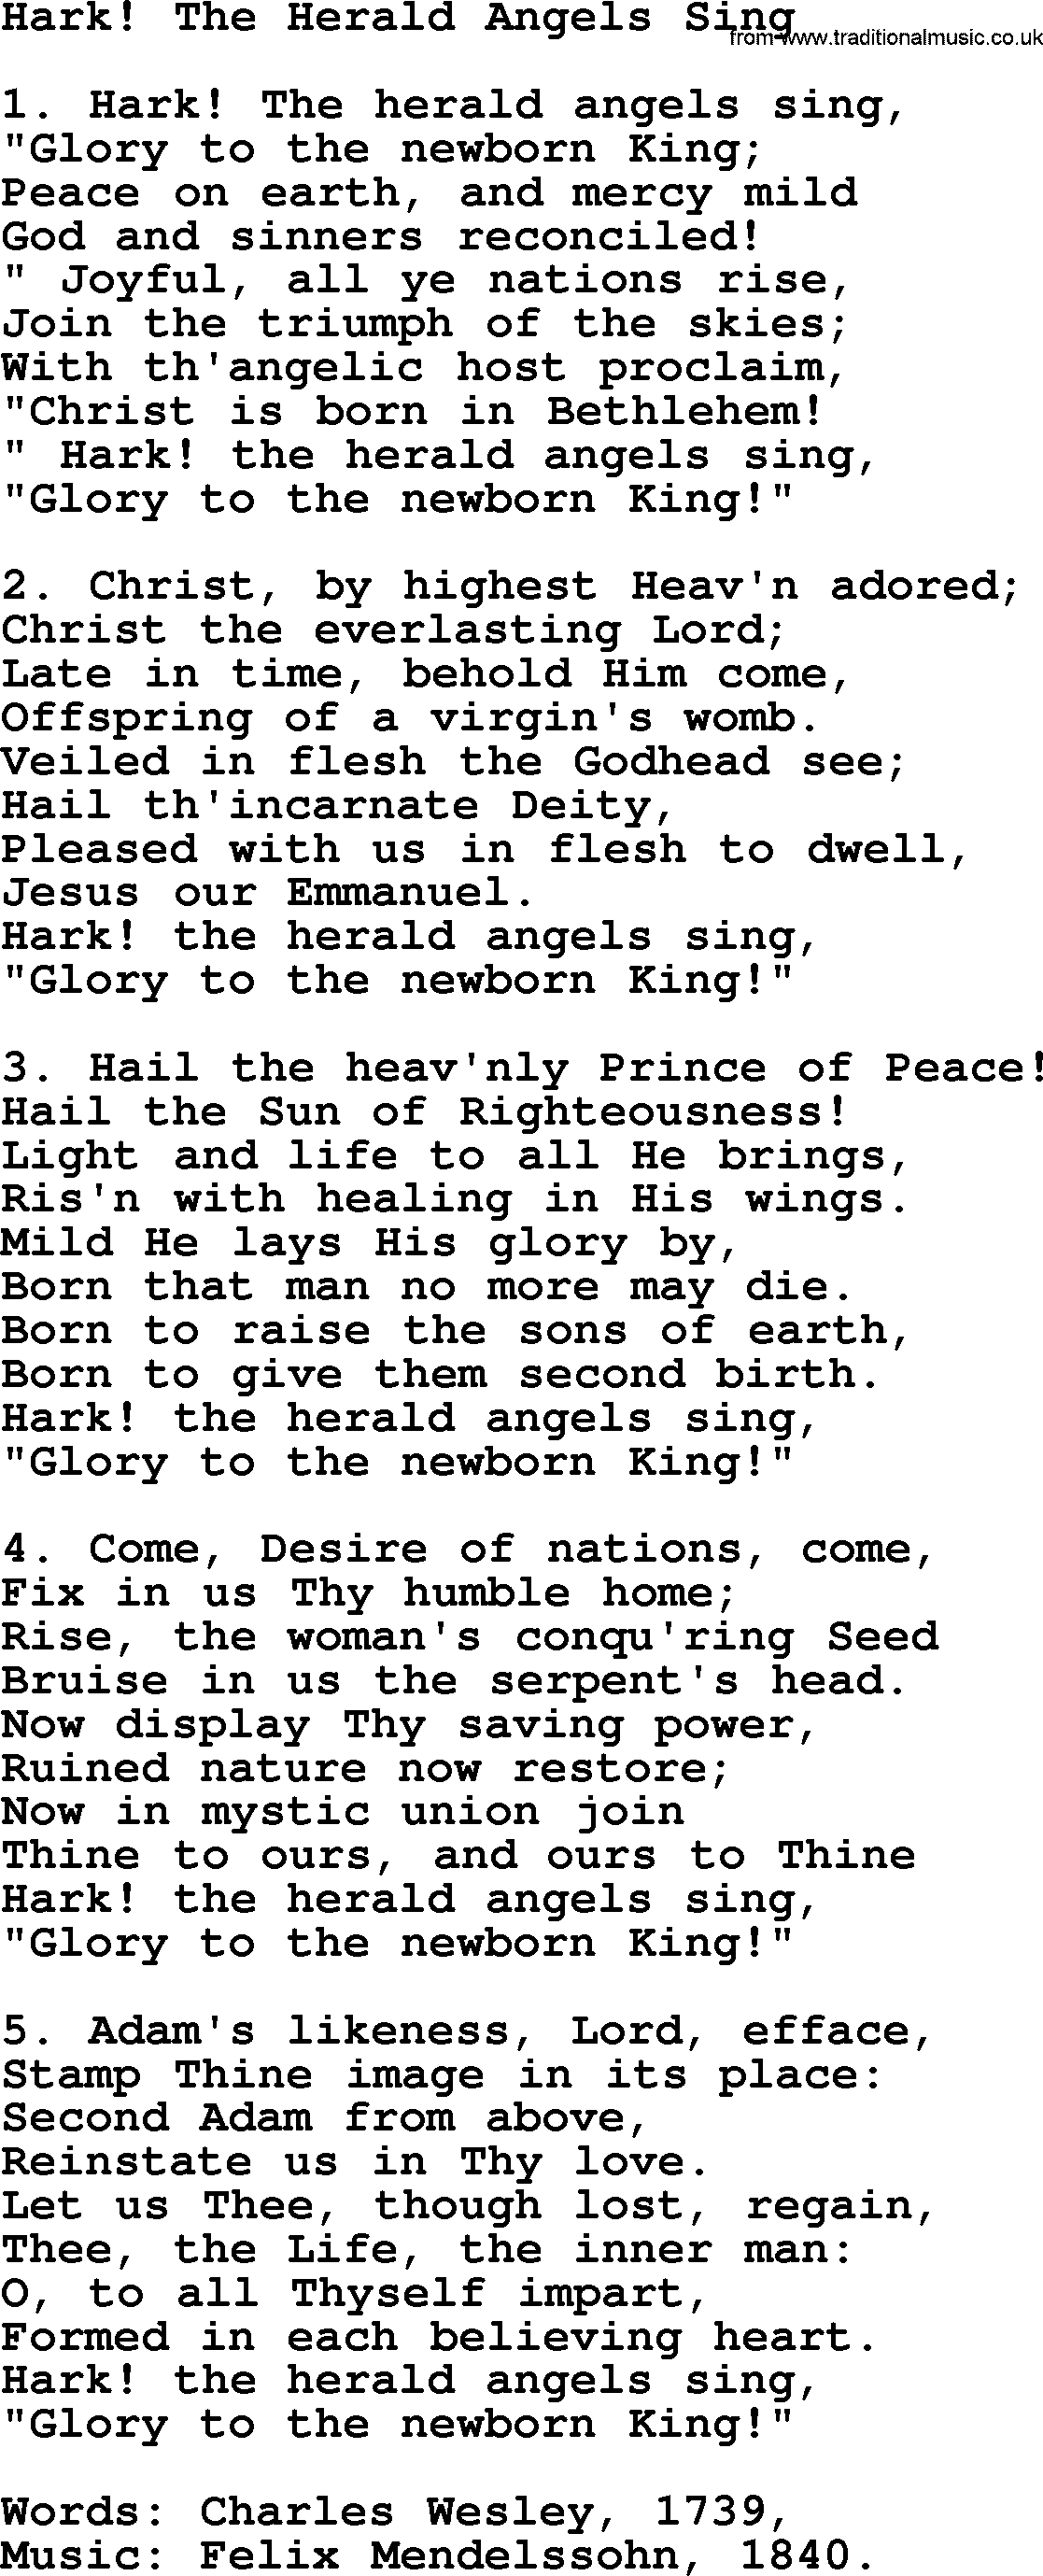 Hark The Herald Angels Sing Christmas Song Lyrics - LyricsWalls